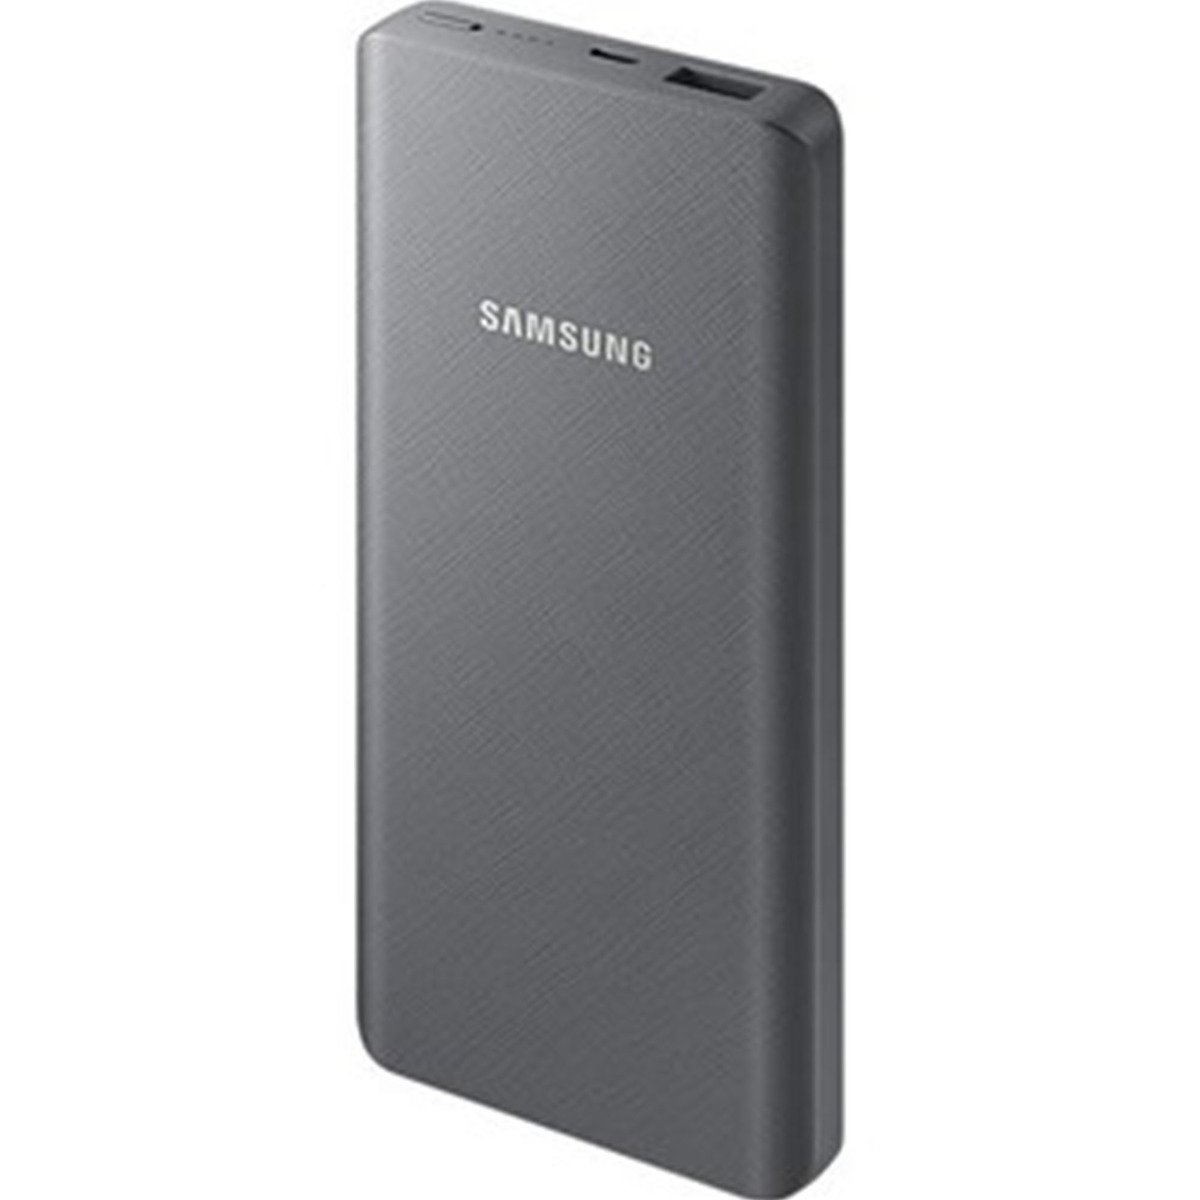 Samsung Battery Pack Extra slim 10,000 mAh Silver